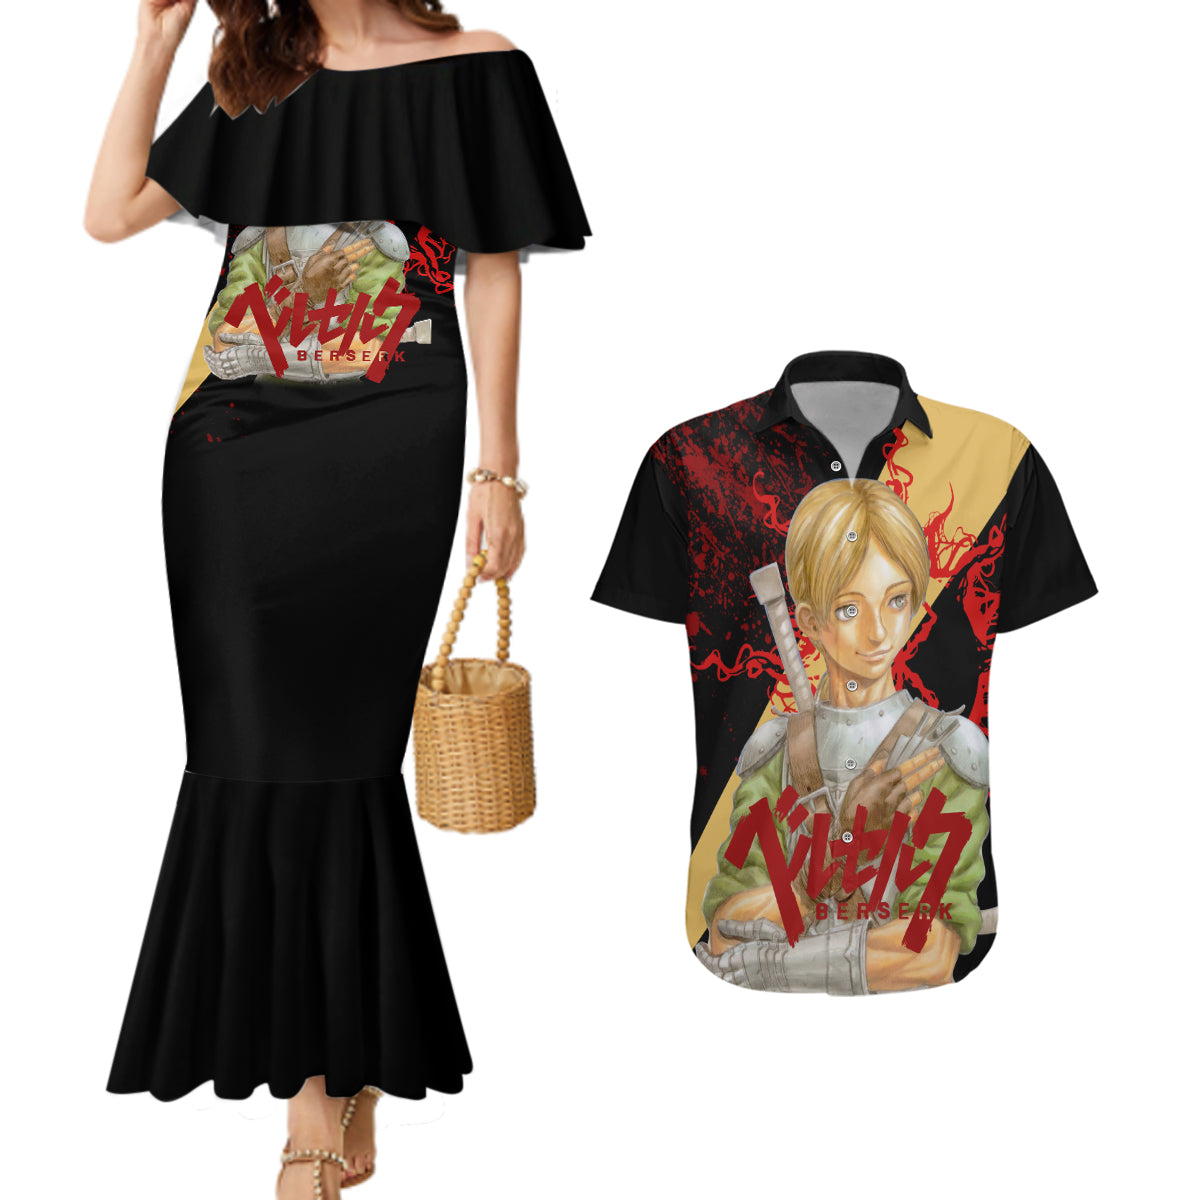 Judeau Berserk Couples Matching Mermaid Dress and Hawaiian Shirt Black Blood Style